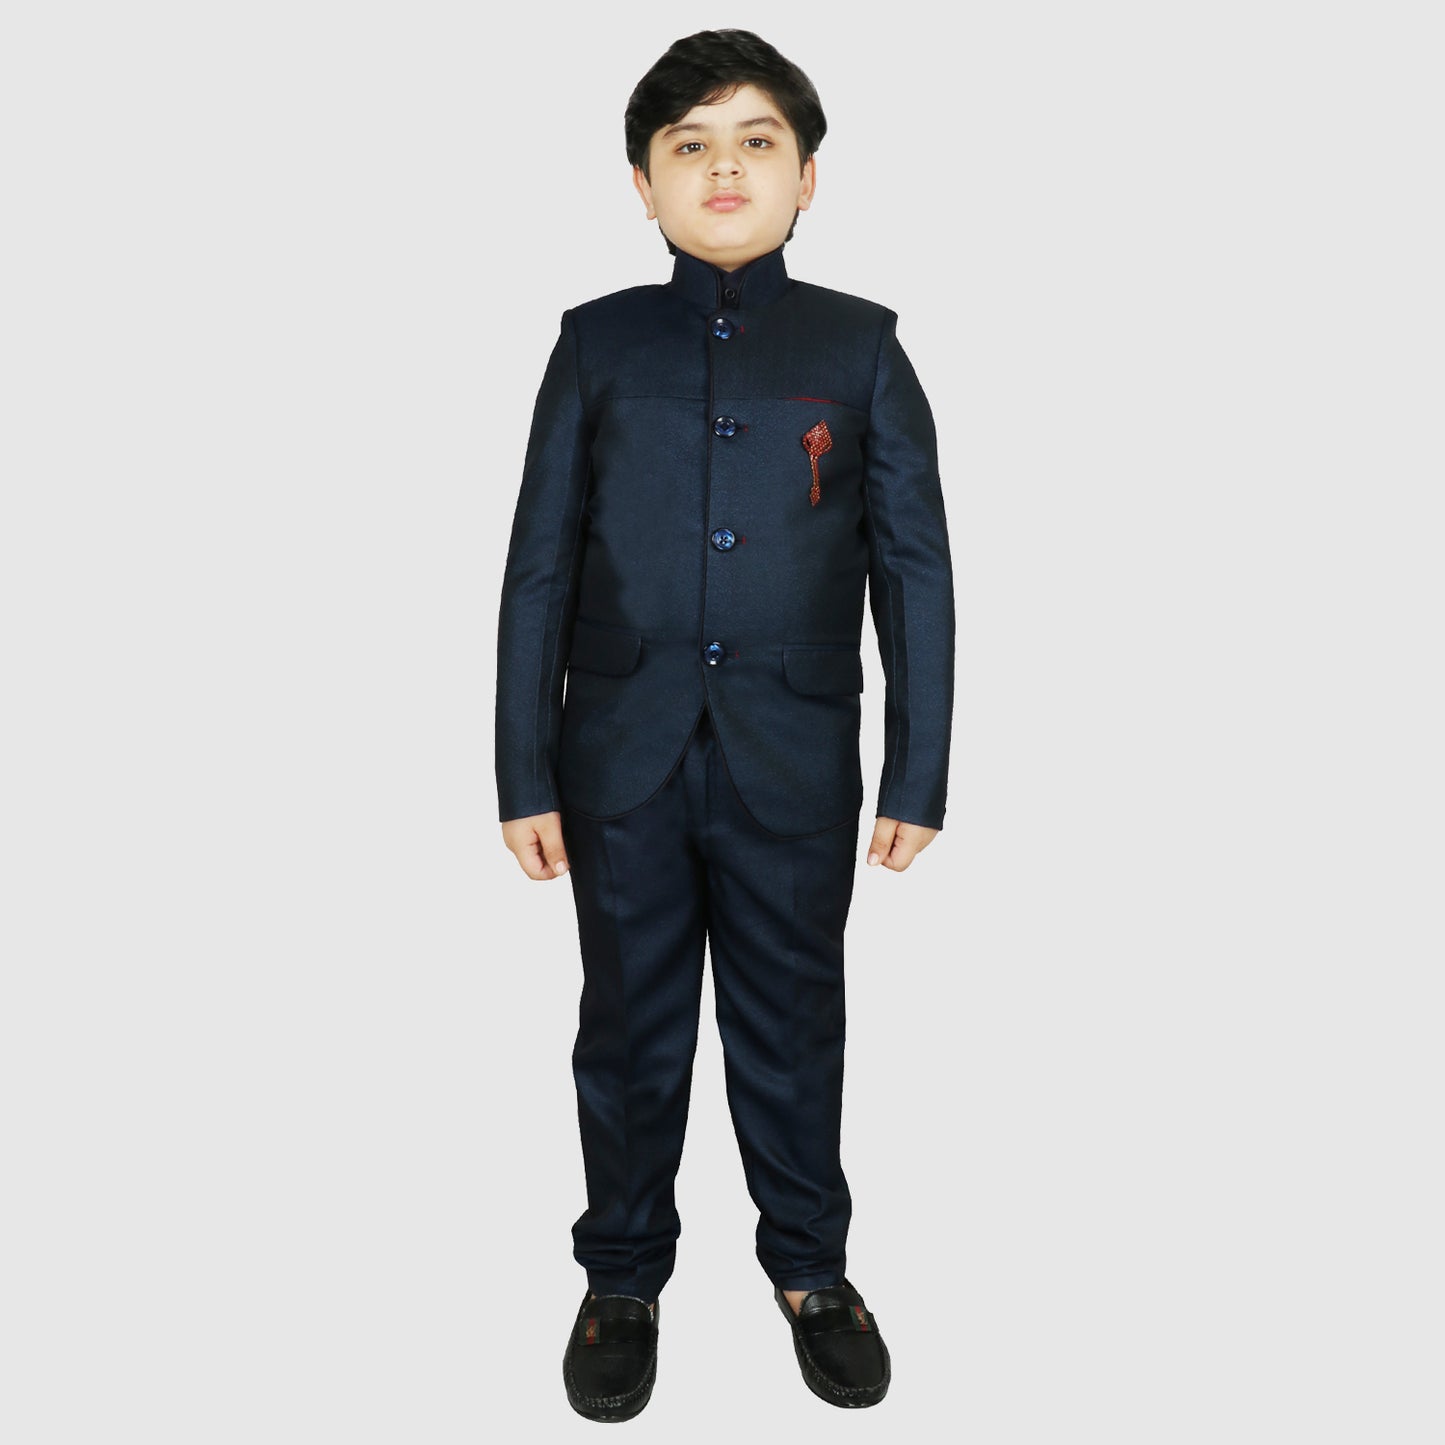 SG YUVRAJ Suits & Sets For Boys (CP-1061)